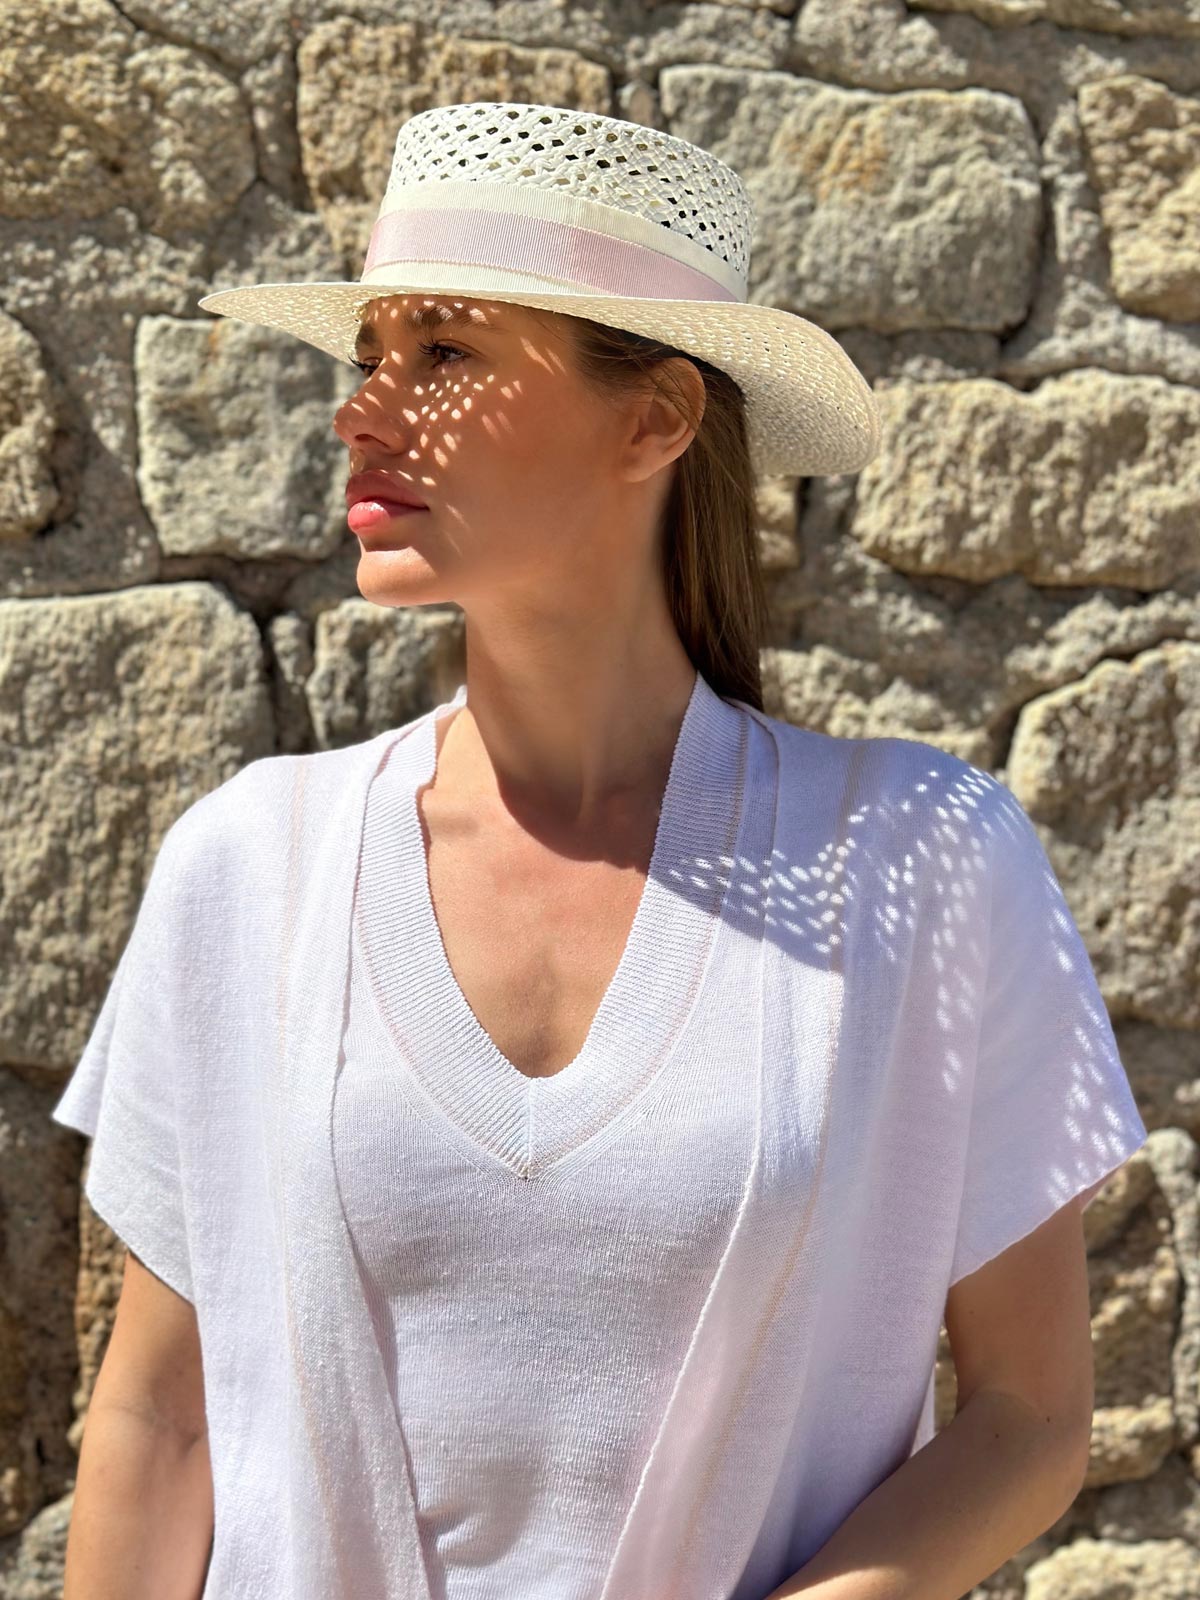 Cocò Dentelle 100% Capri pink and white straw hat worn by model